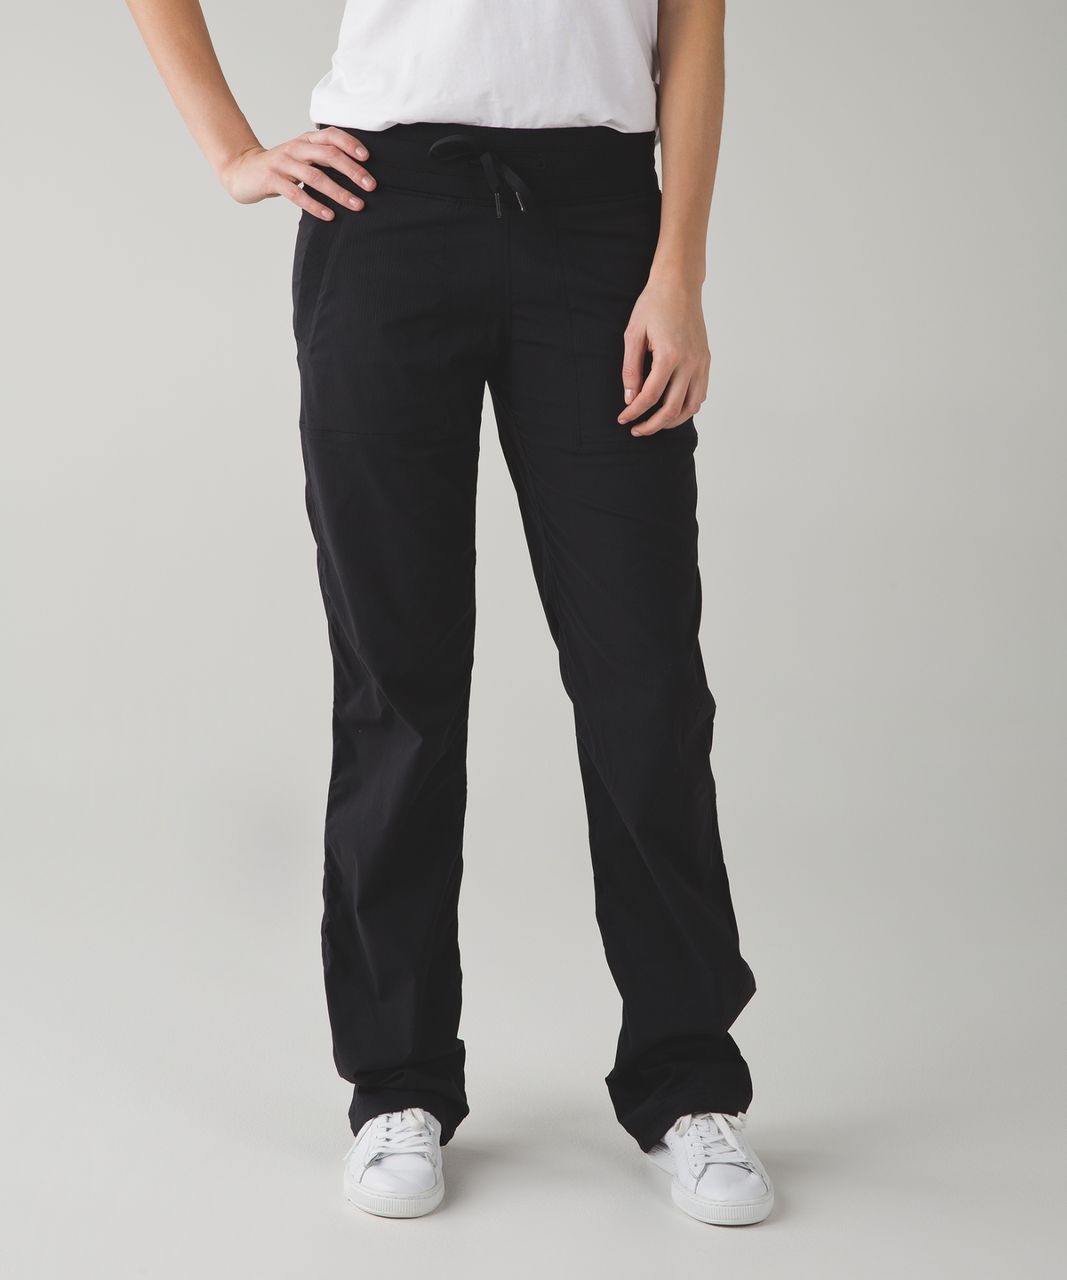 Lululemon Black Dance Studio Pants Size 2 - $40 (66% Off Retail) - From  Lauren